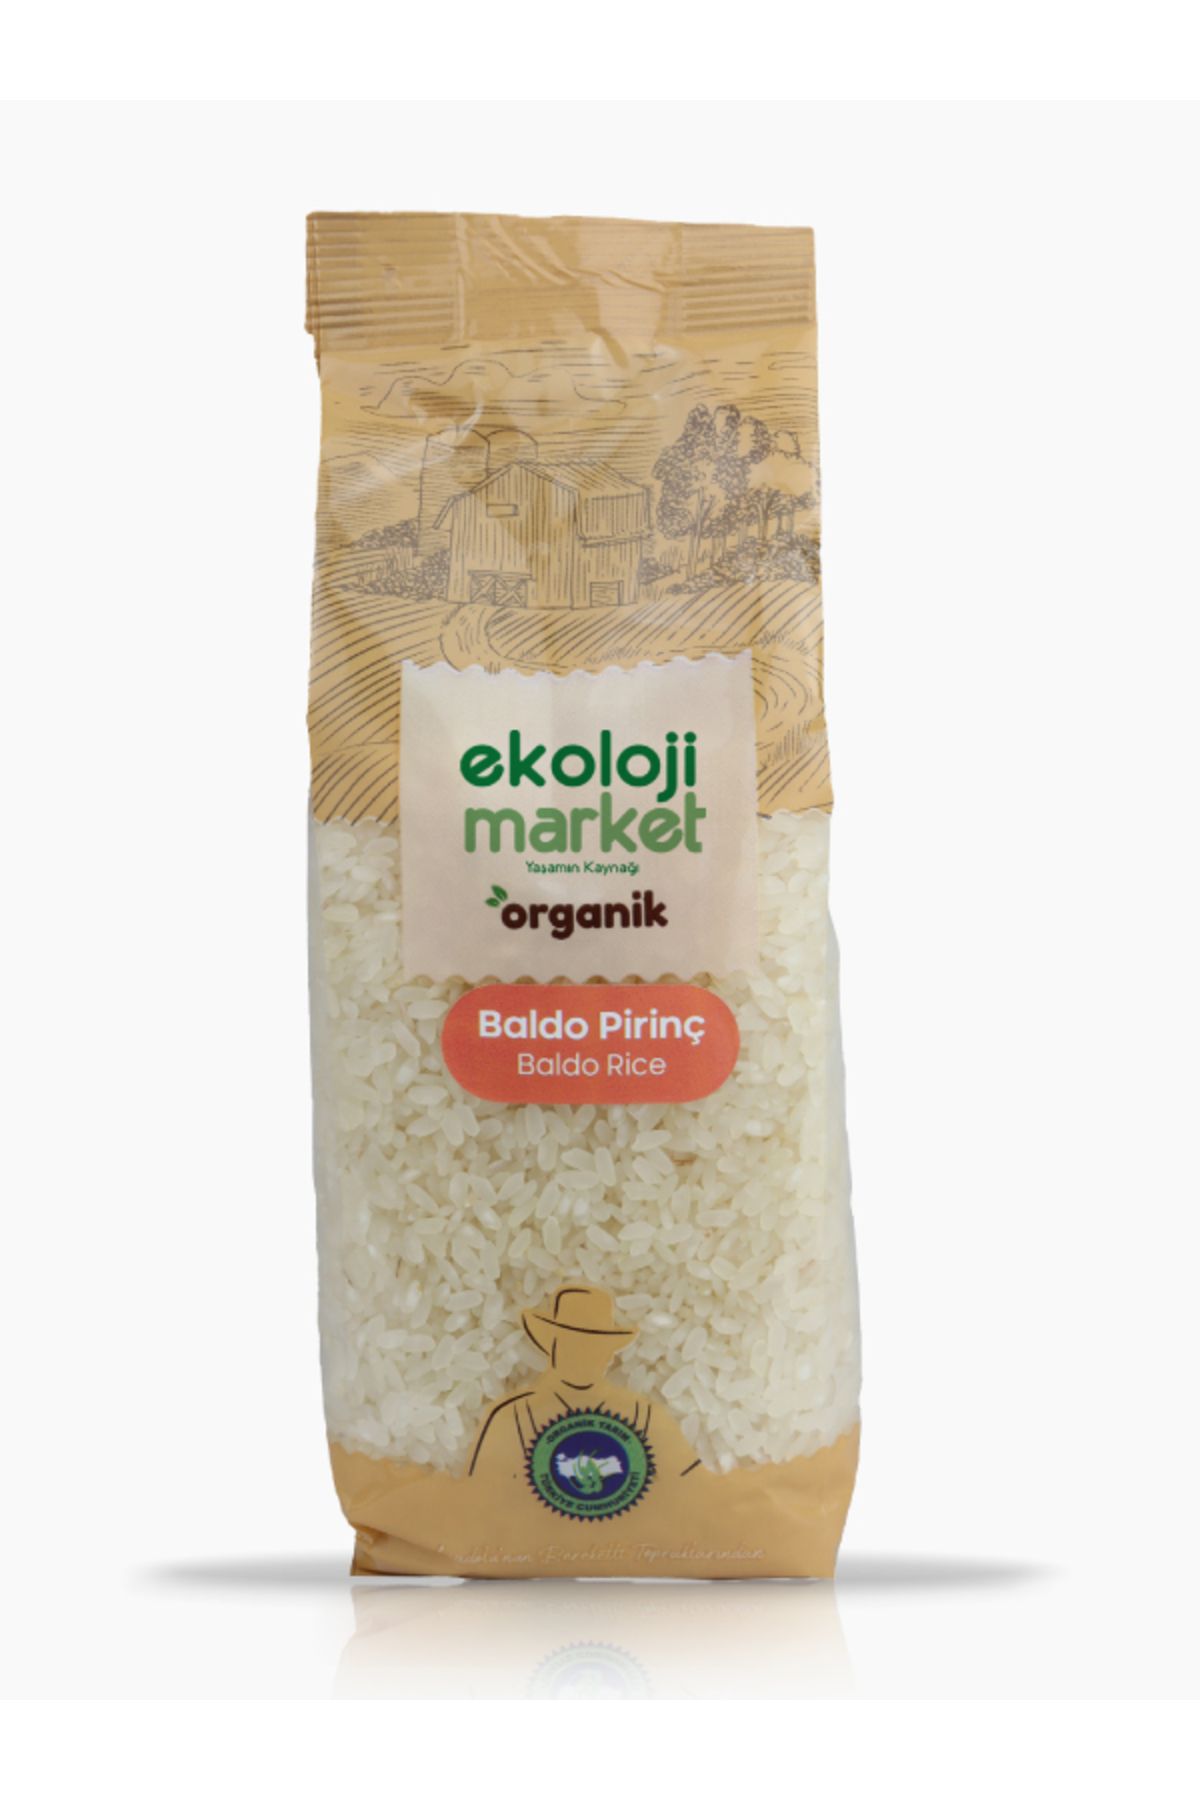 Ekoloji Market Organik Baldo Pirinç 750 gr